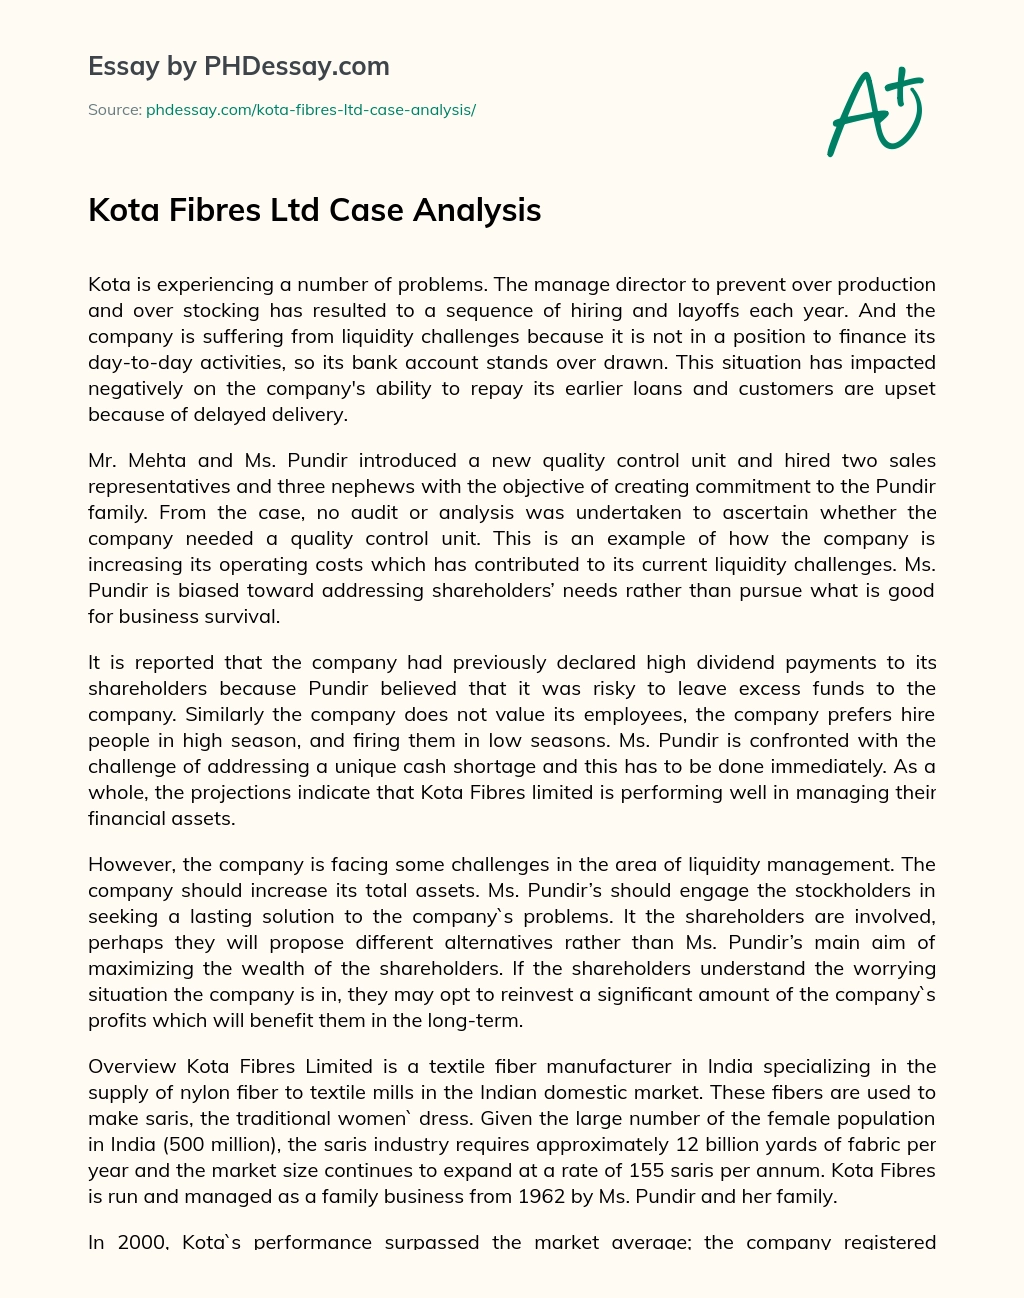 Kota Fibres Ltd Case Analysis essay